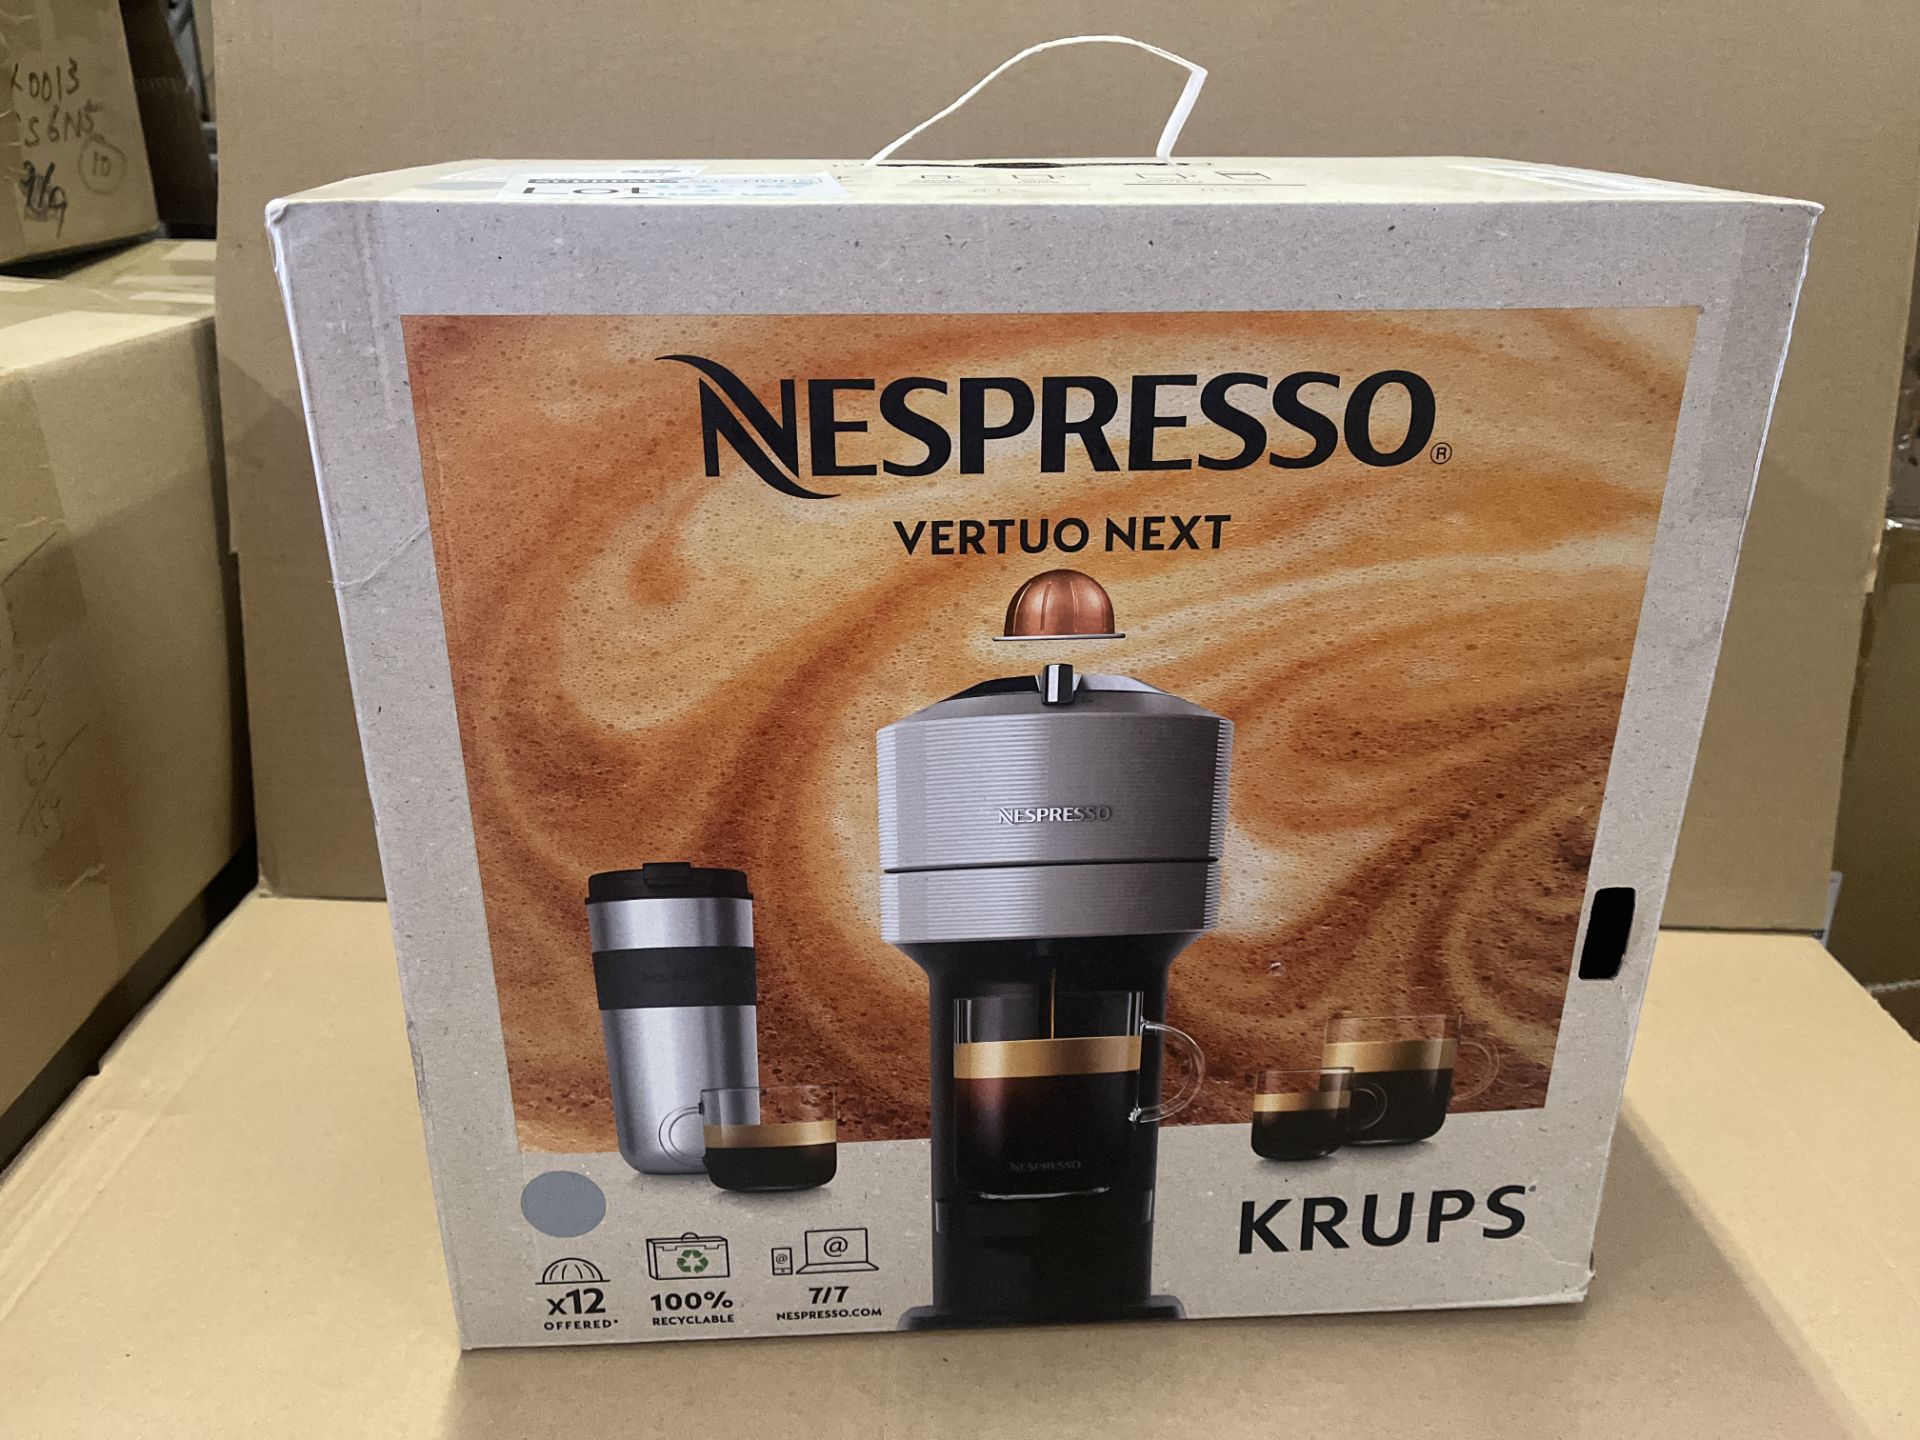 NESPRESSO KRUPS VERTUO NEXT COFFEE MACHINE S2